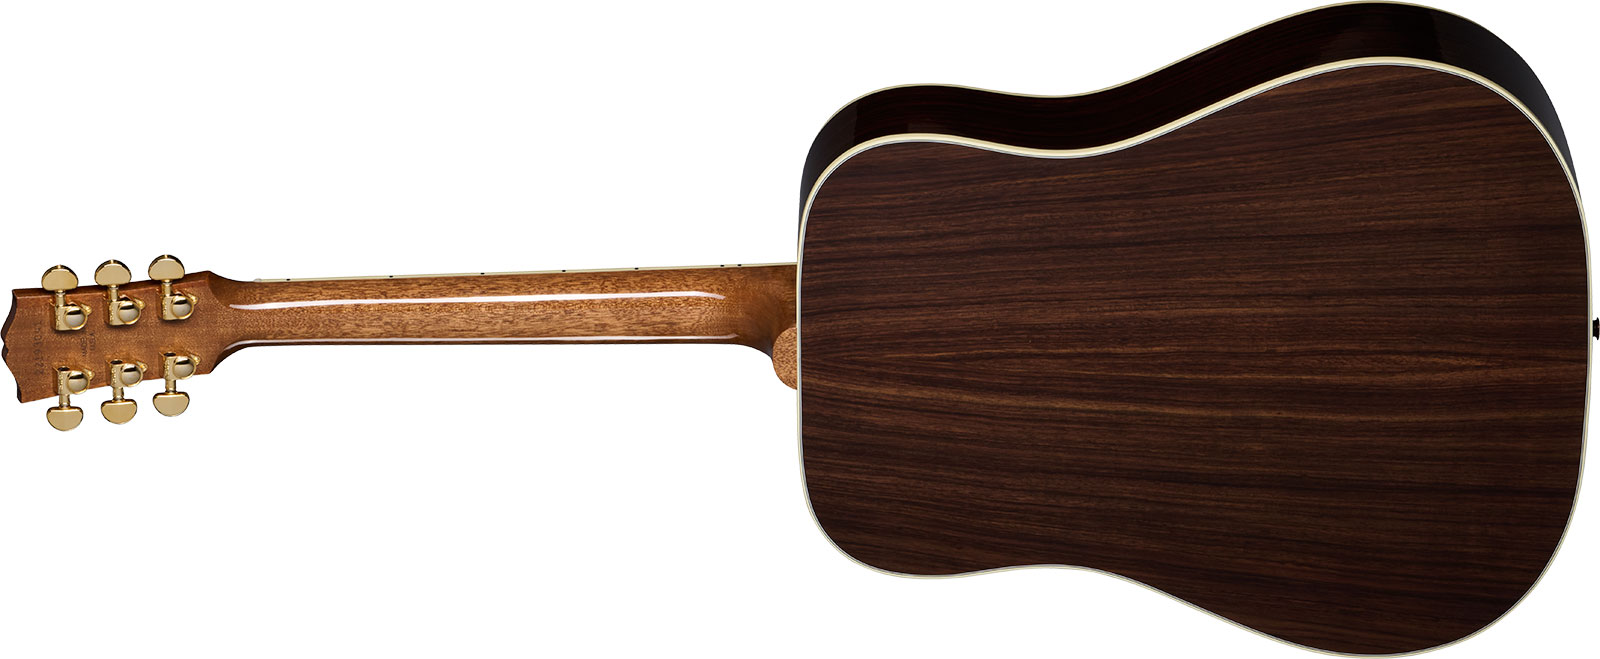 Gibson Hummingbird Standard Rosewood Dreadnought Epicea Acajou Rw - Rosewood Burst - Elektroakustische Gitarre - Variation 1